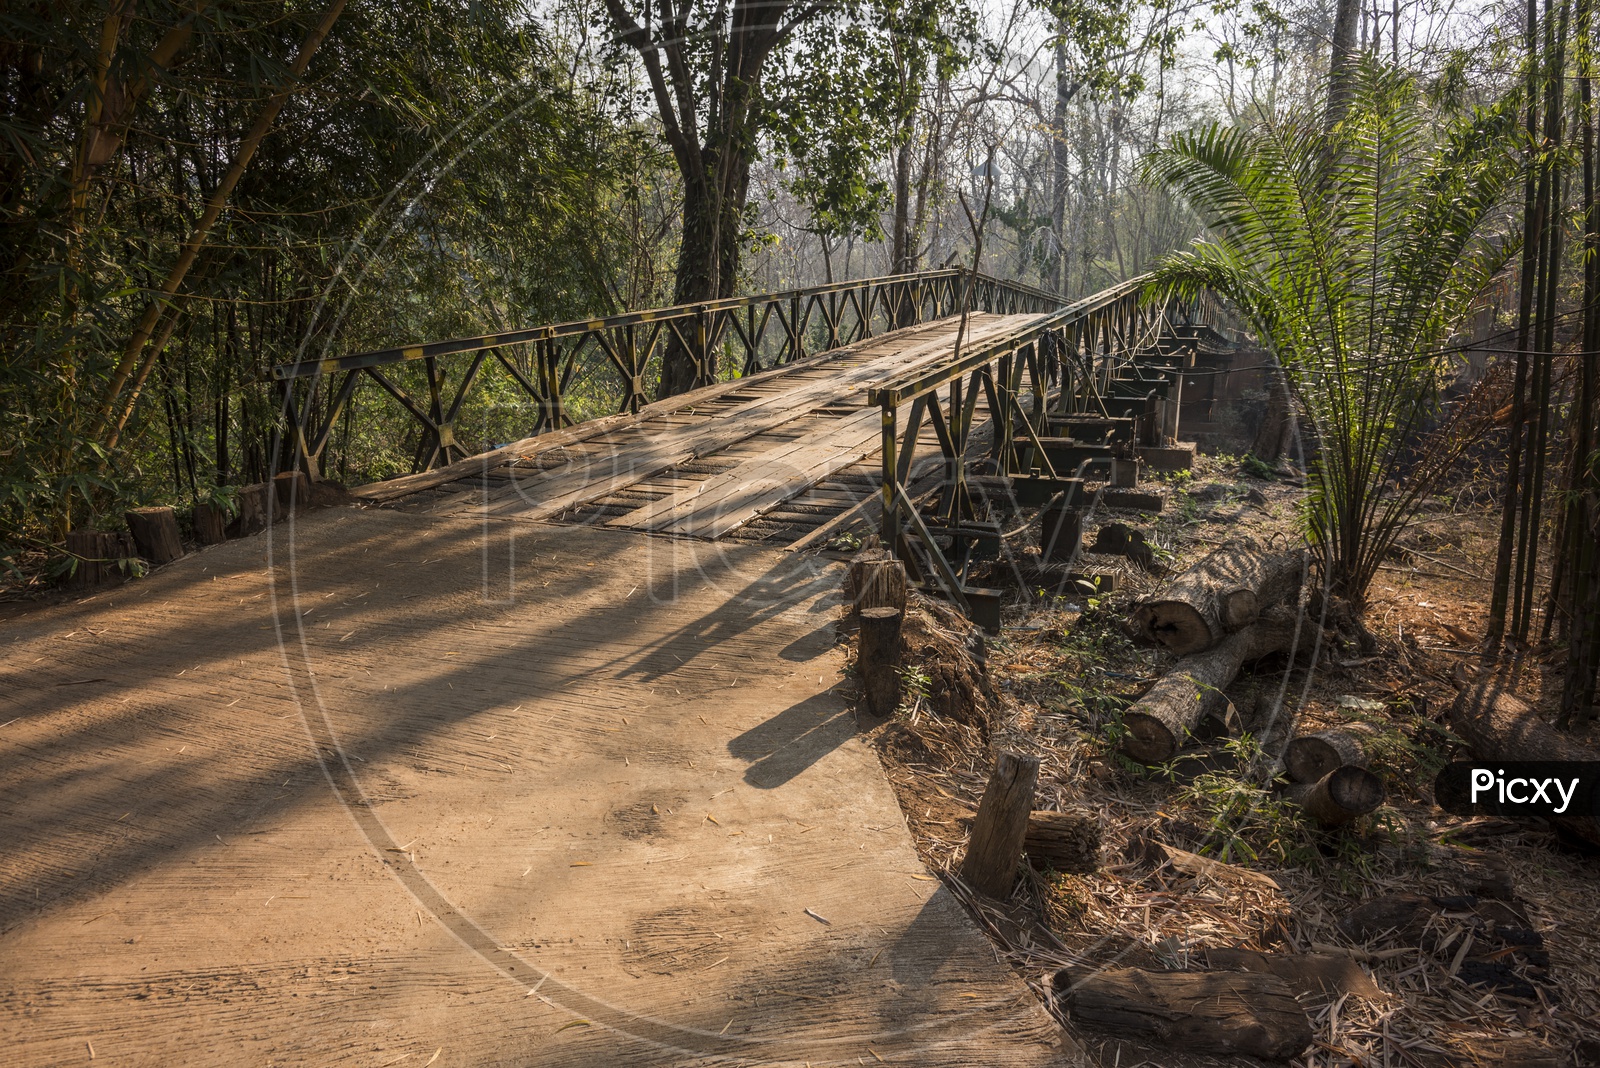 A Wooden bridge in Laos during sunrise